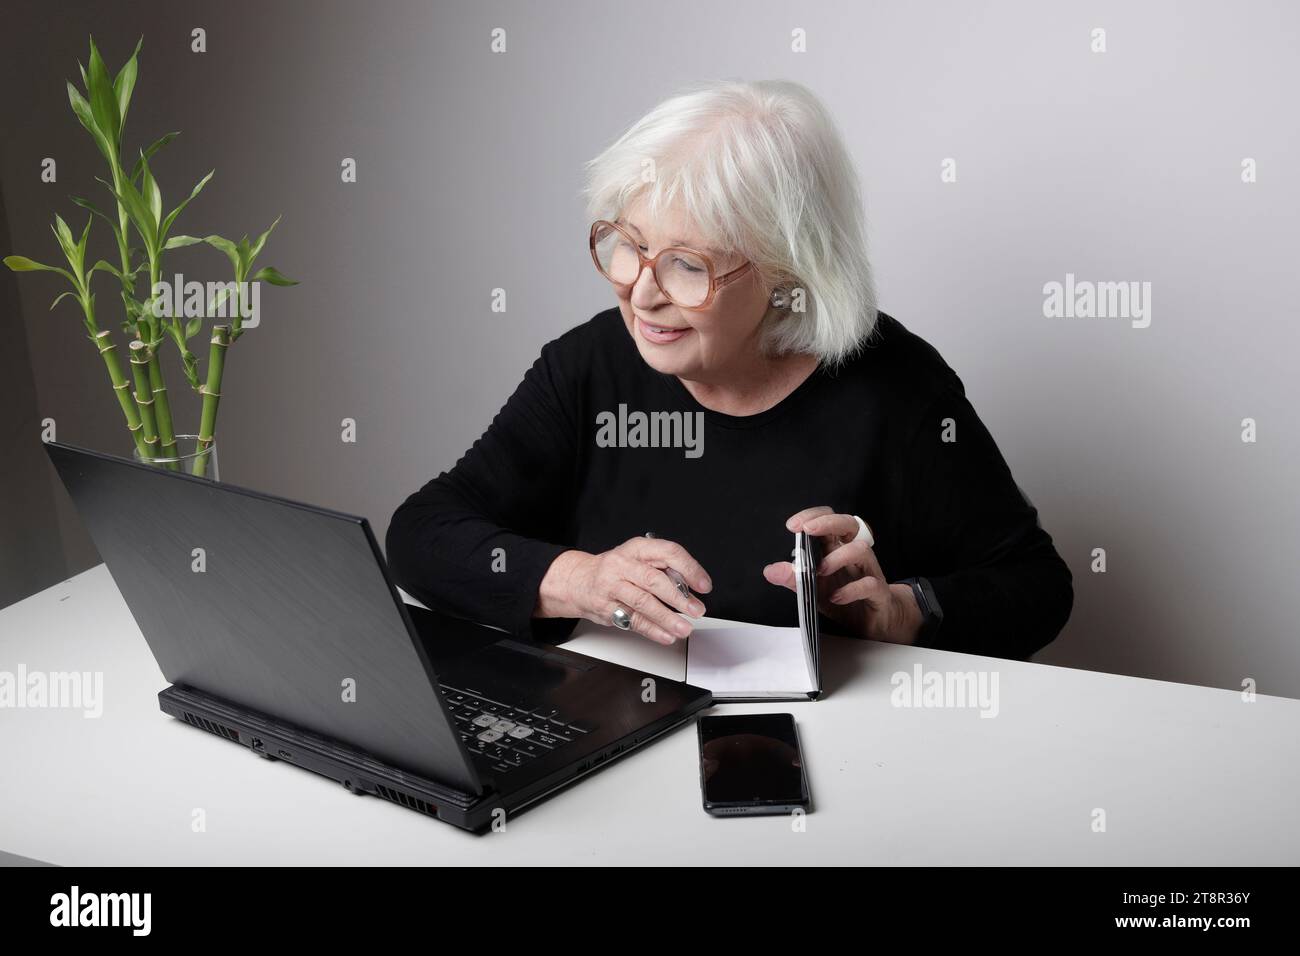 donna anziana che tira giù appunti in un notebook seduto di fronte a un notebook Foto Stock